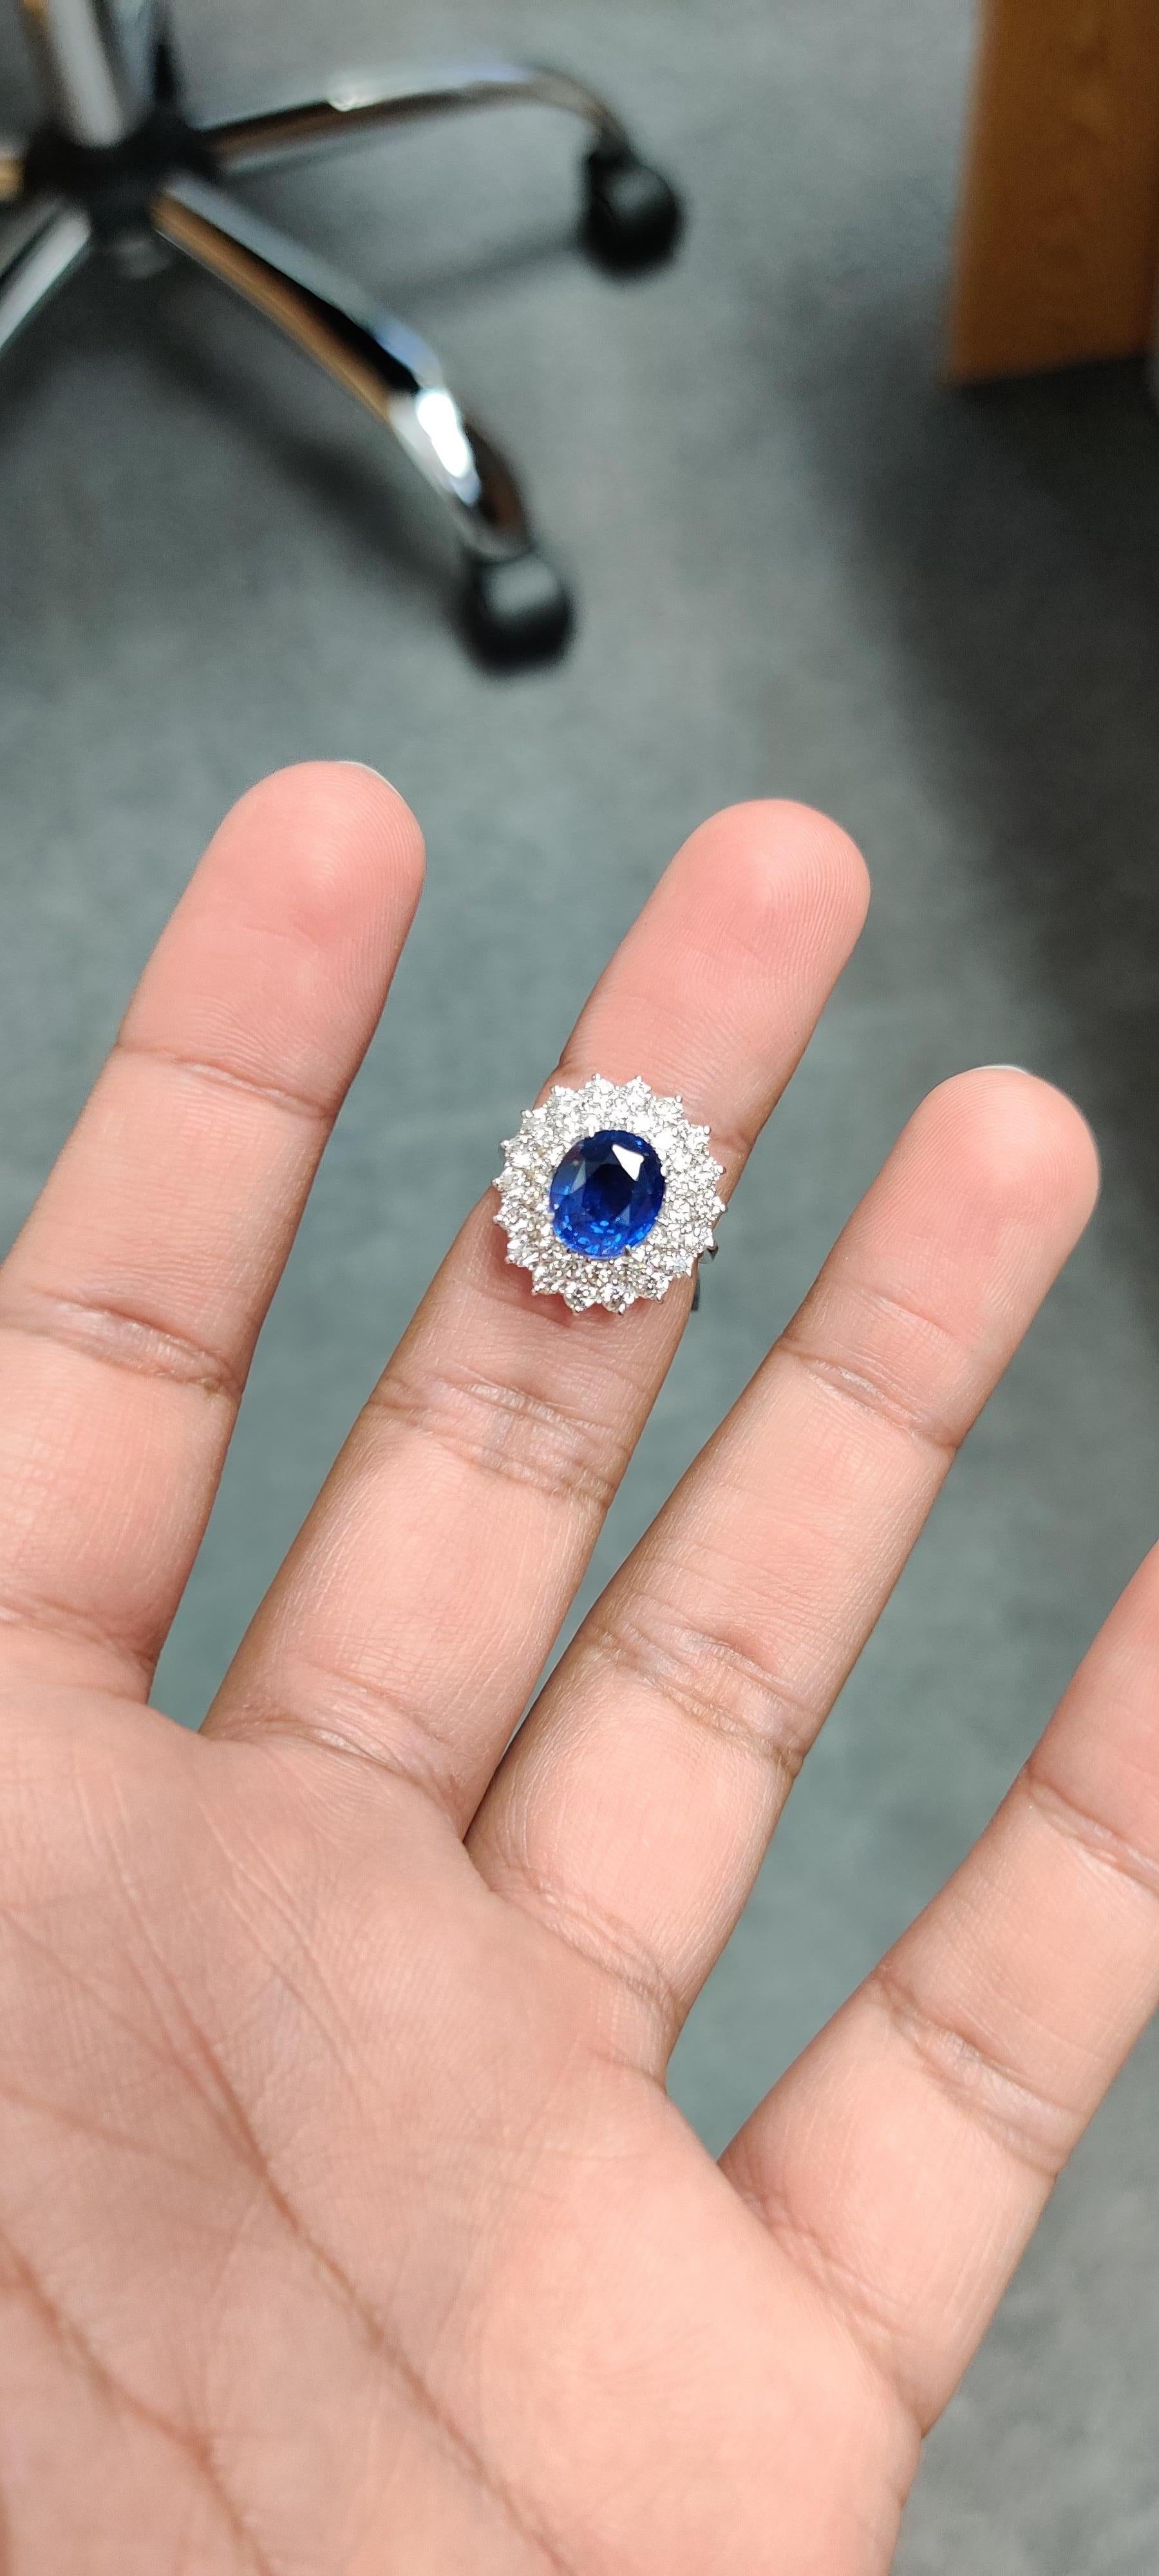 Oval Cut 3.74 Carat Sri Lanka Blue Sapphire Diamond Ring in 18K Gold For Sale